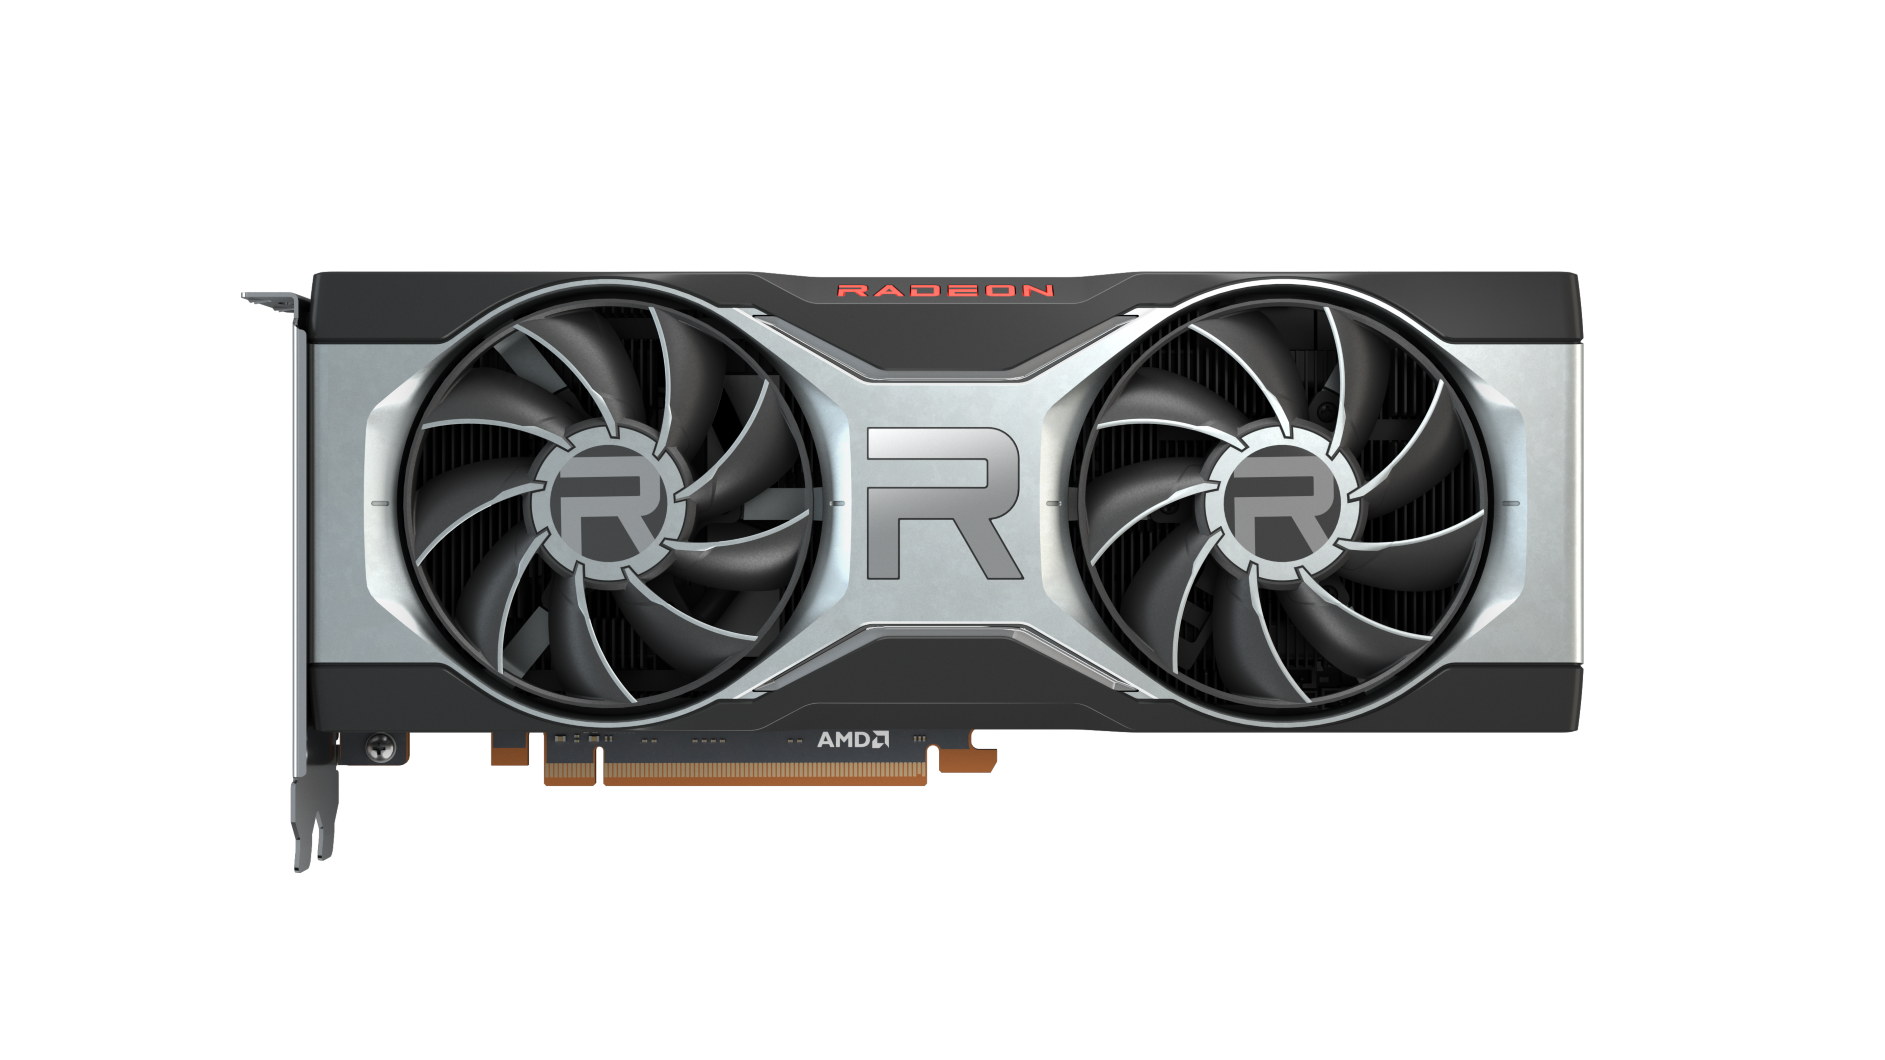 amd radeon rx 6700 xt graphics card 2 AMD เปิดตัวกราฟิกการ์ดใหม่ AMD Radeon RX 6700 XT มอบประสบการณ์การเล่นเกมที่ยอดเยี่ยมในความละเอียดระดับ 1440p